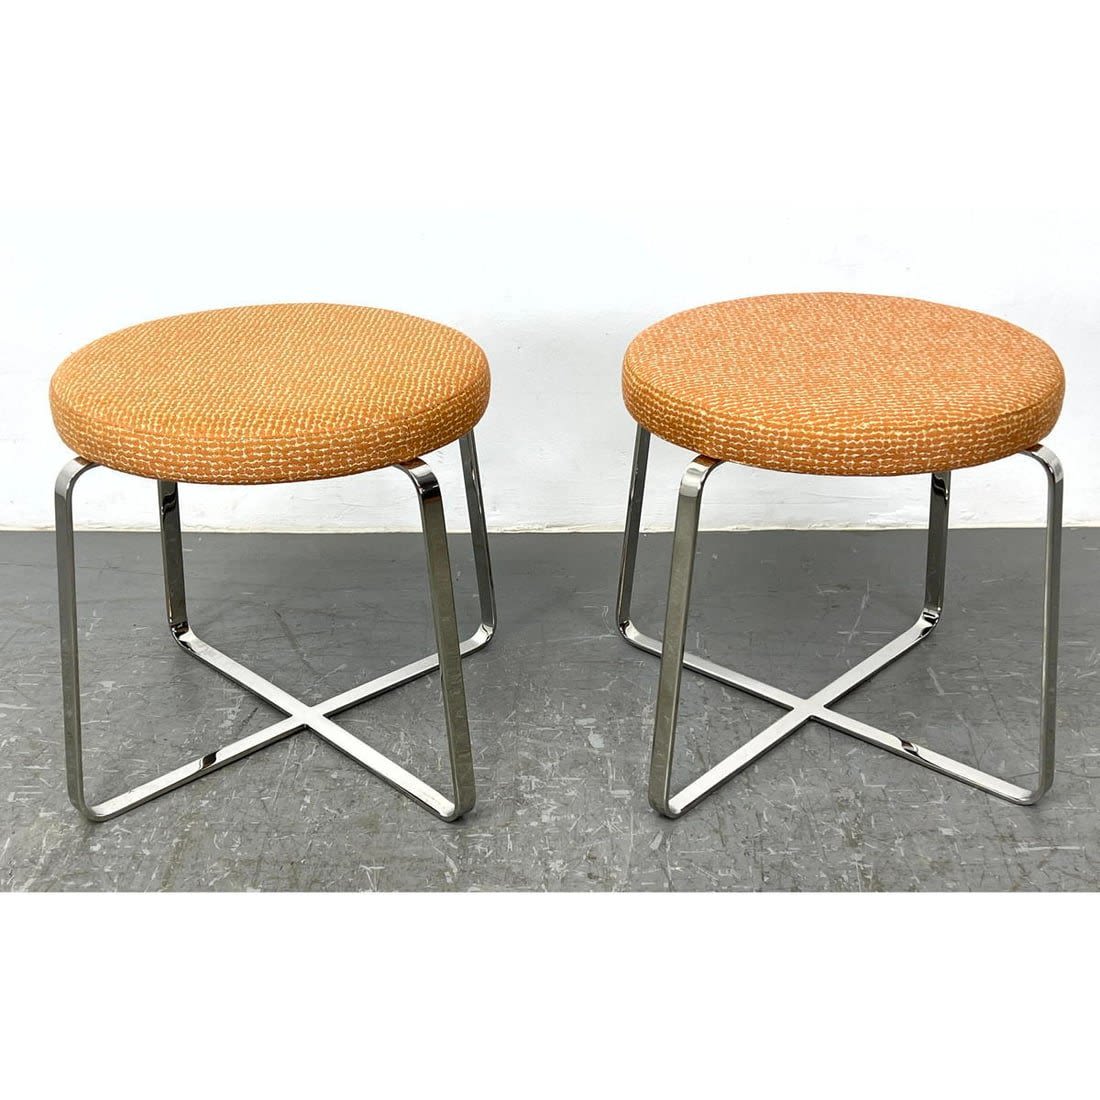 Pr chrome base stools with upholstered